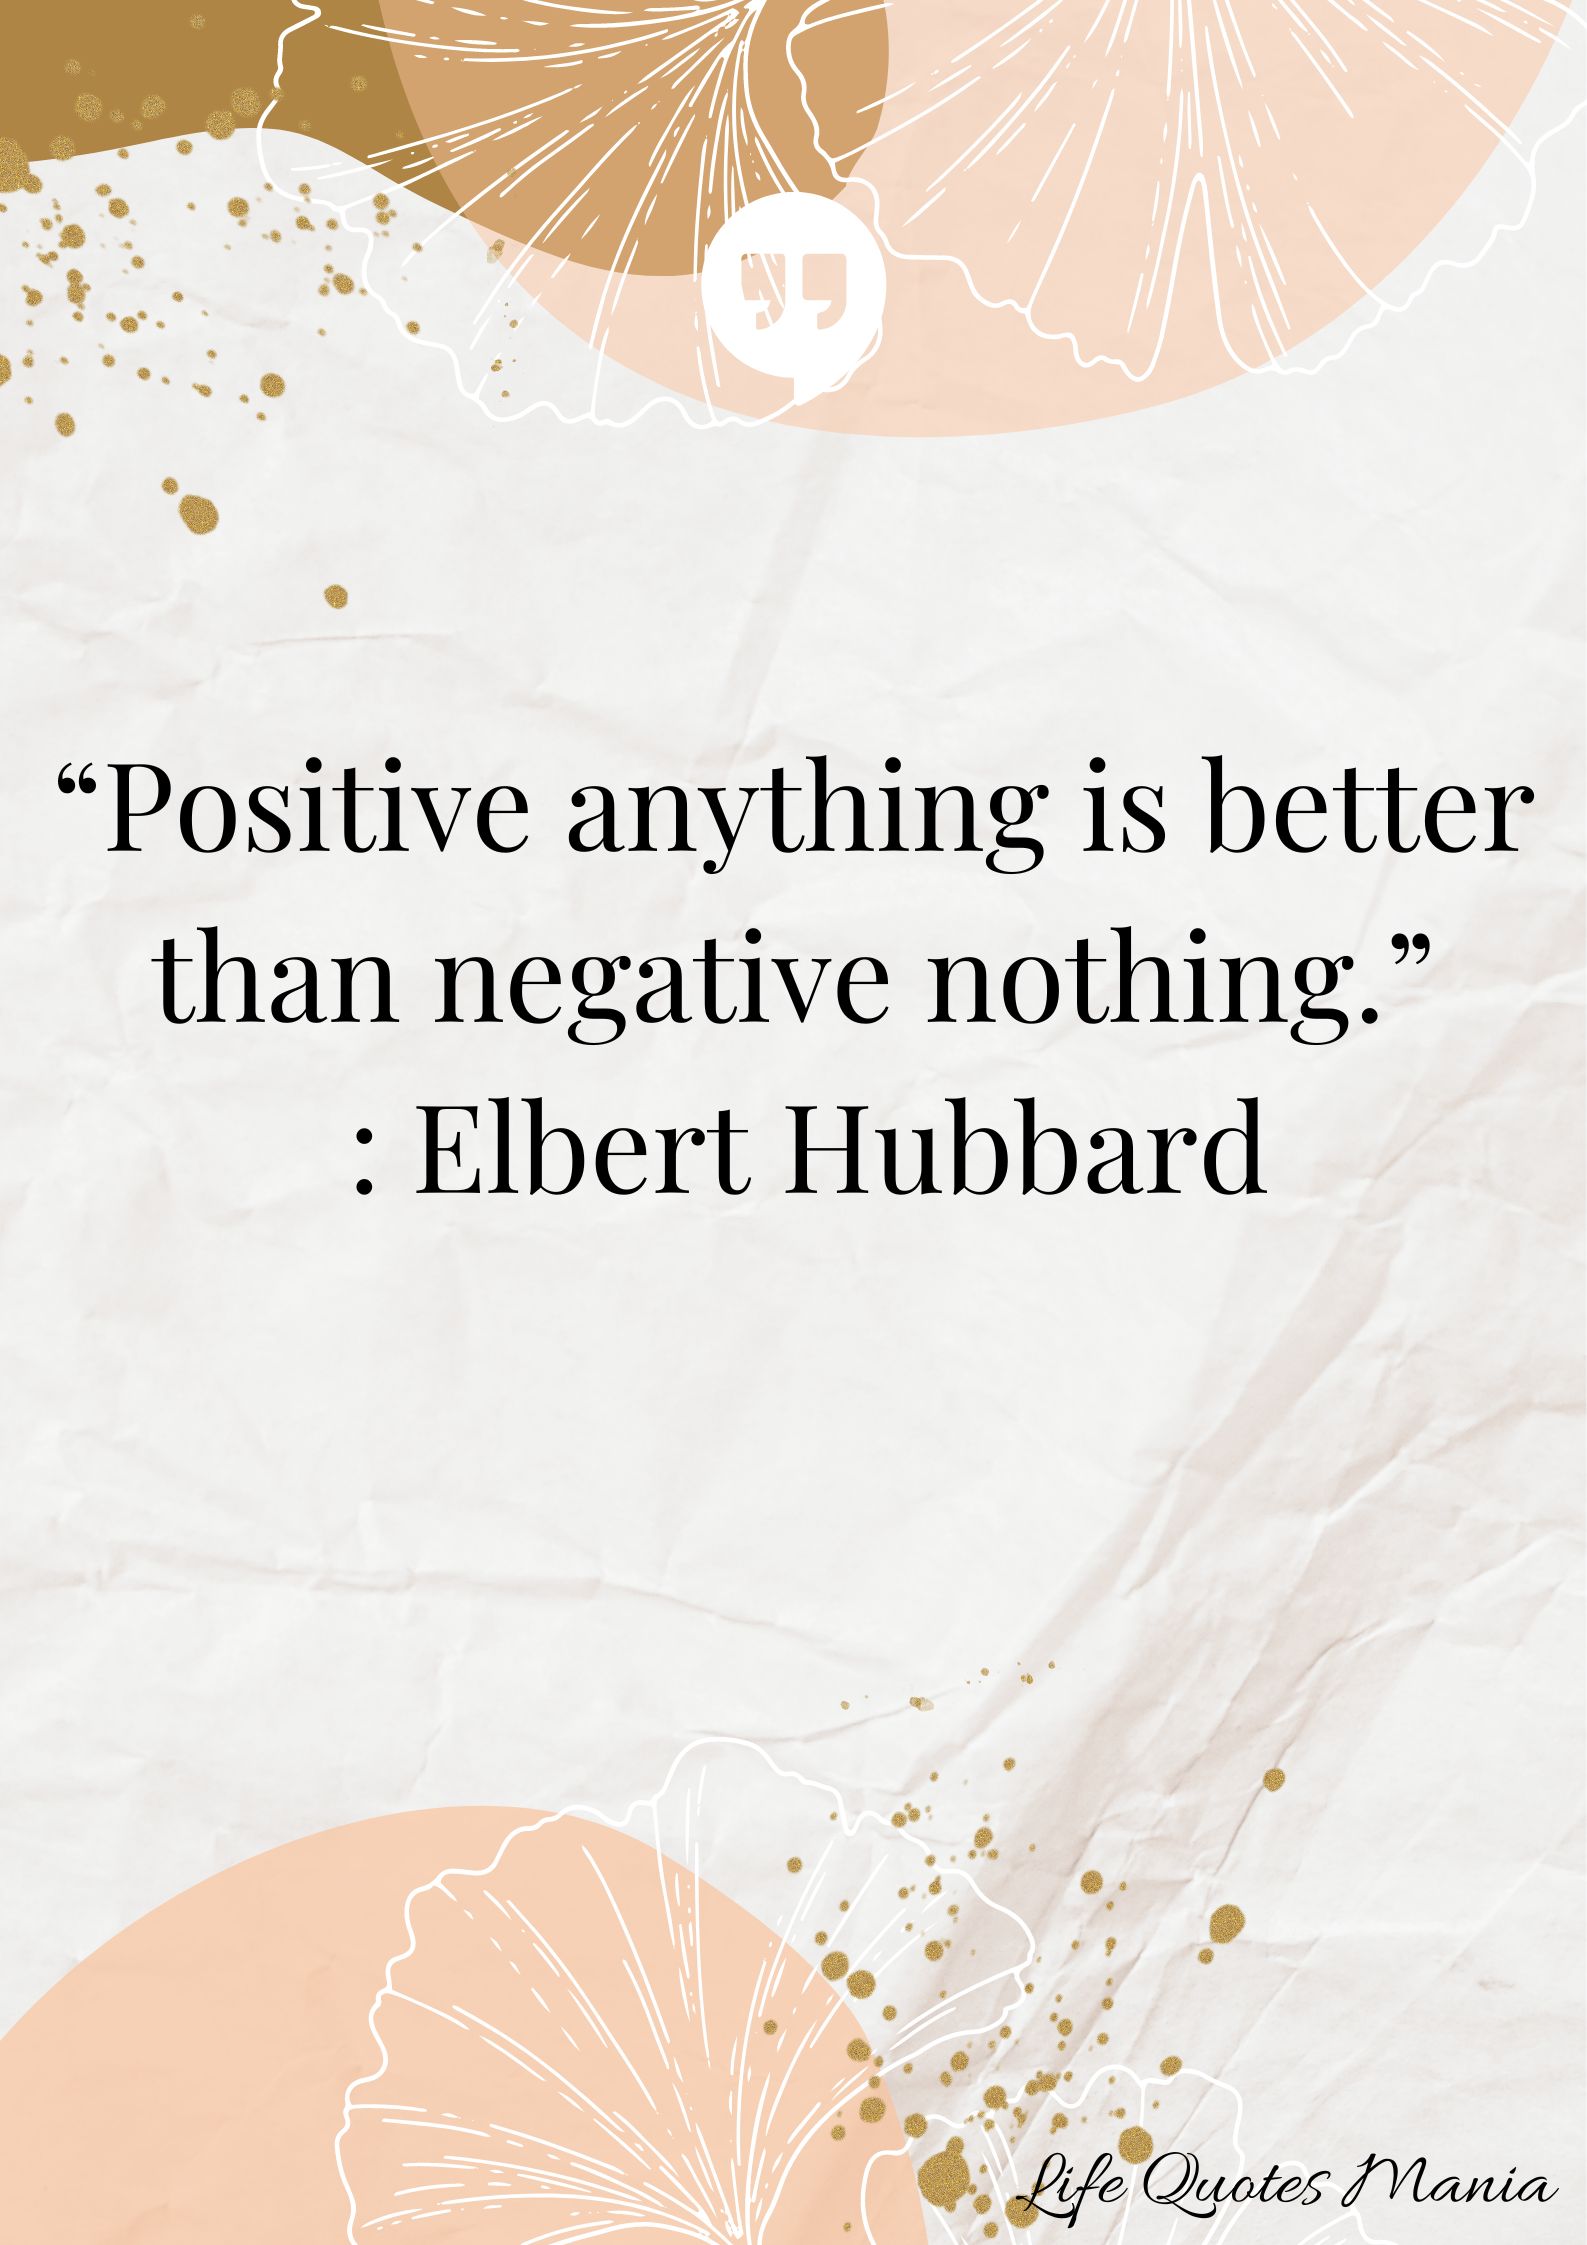 Attitude Quote - Elbert Hubbard